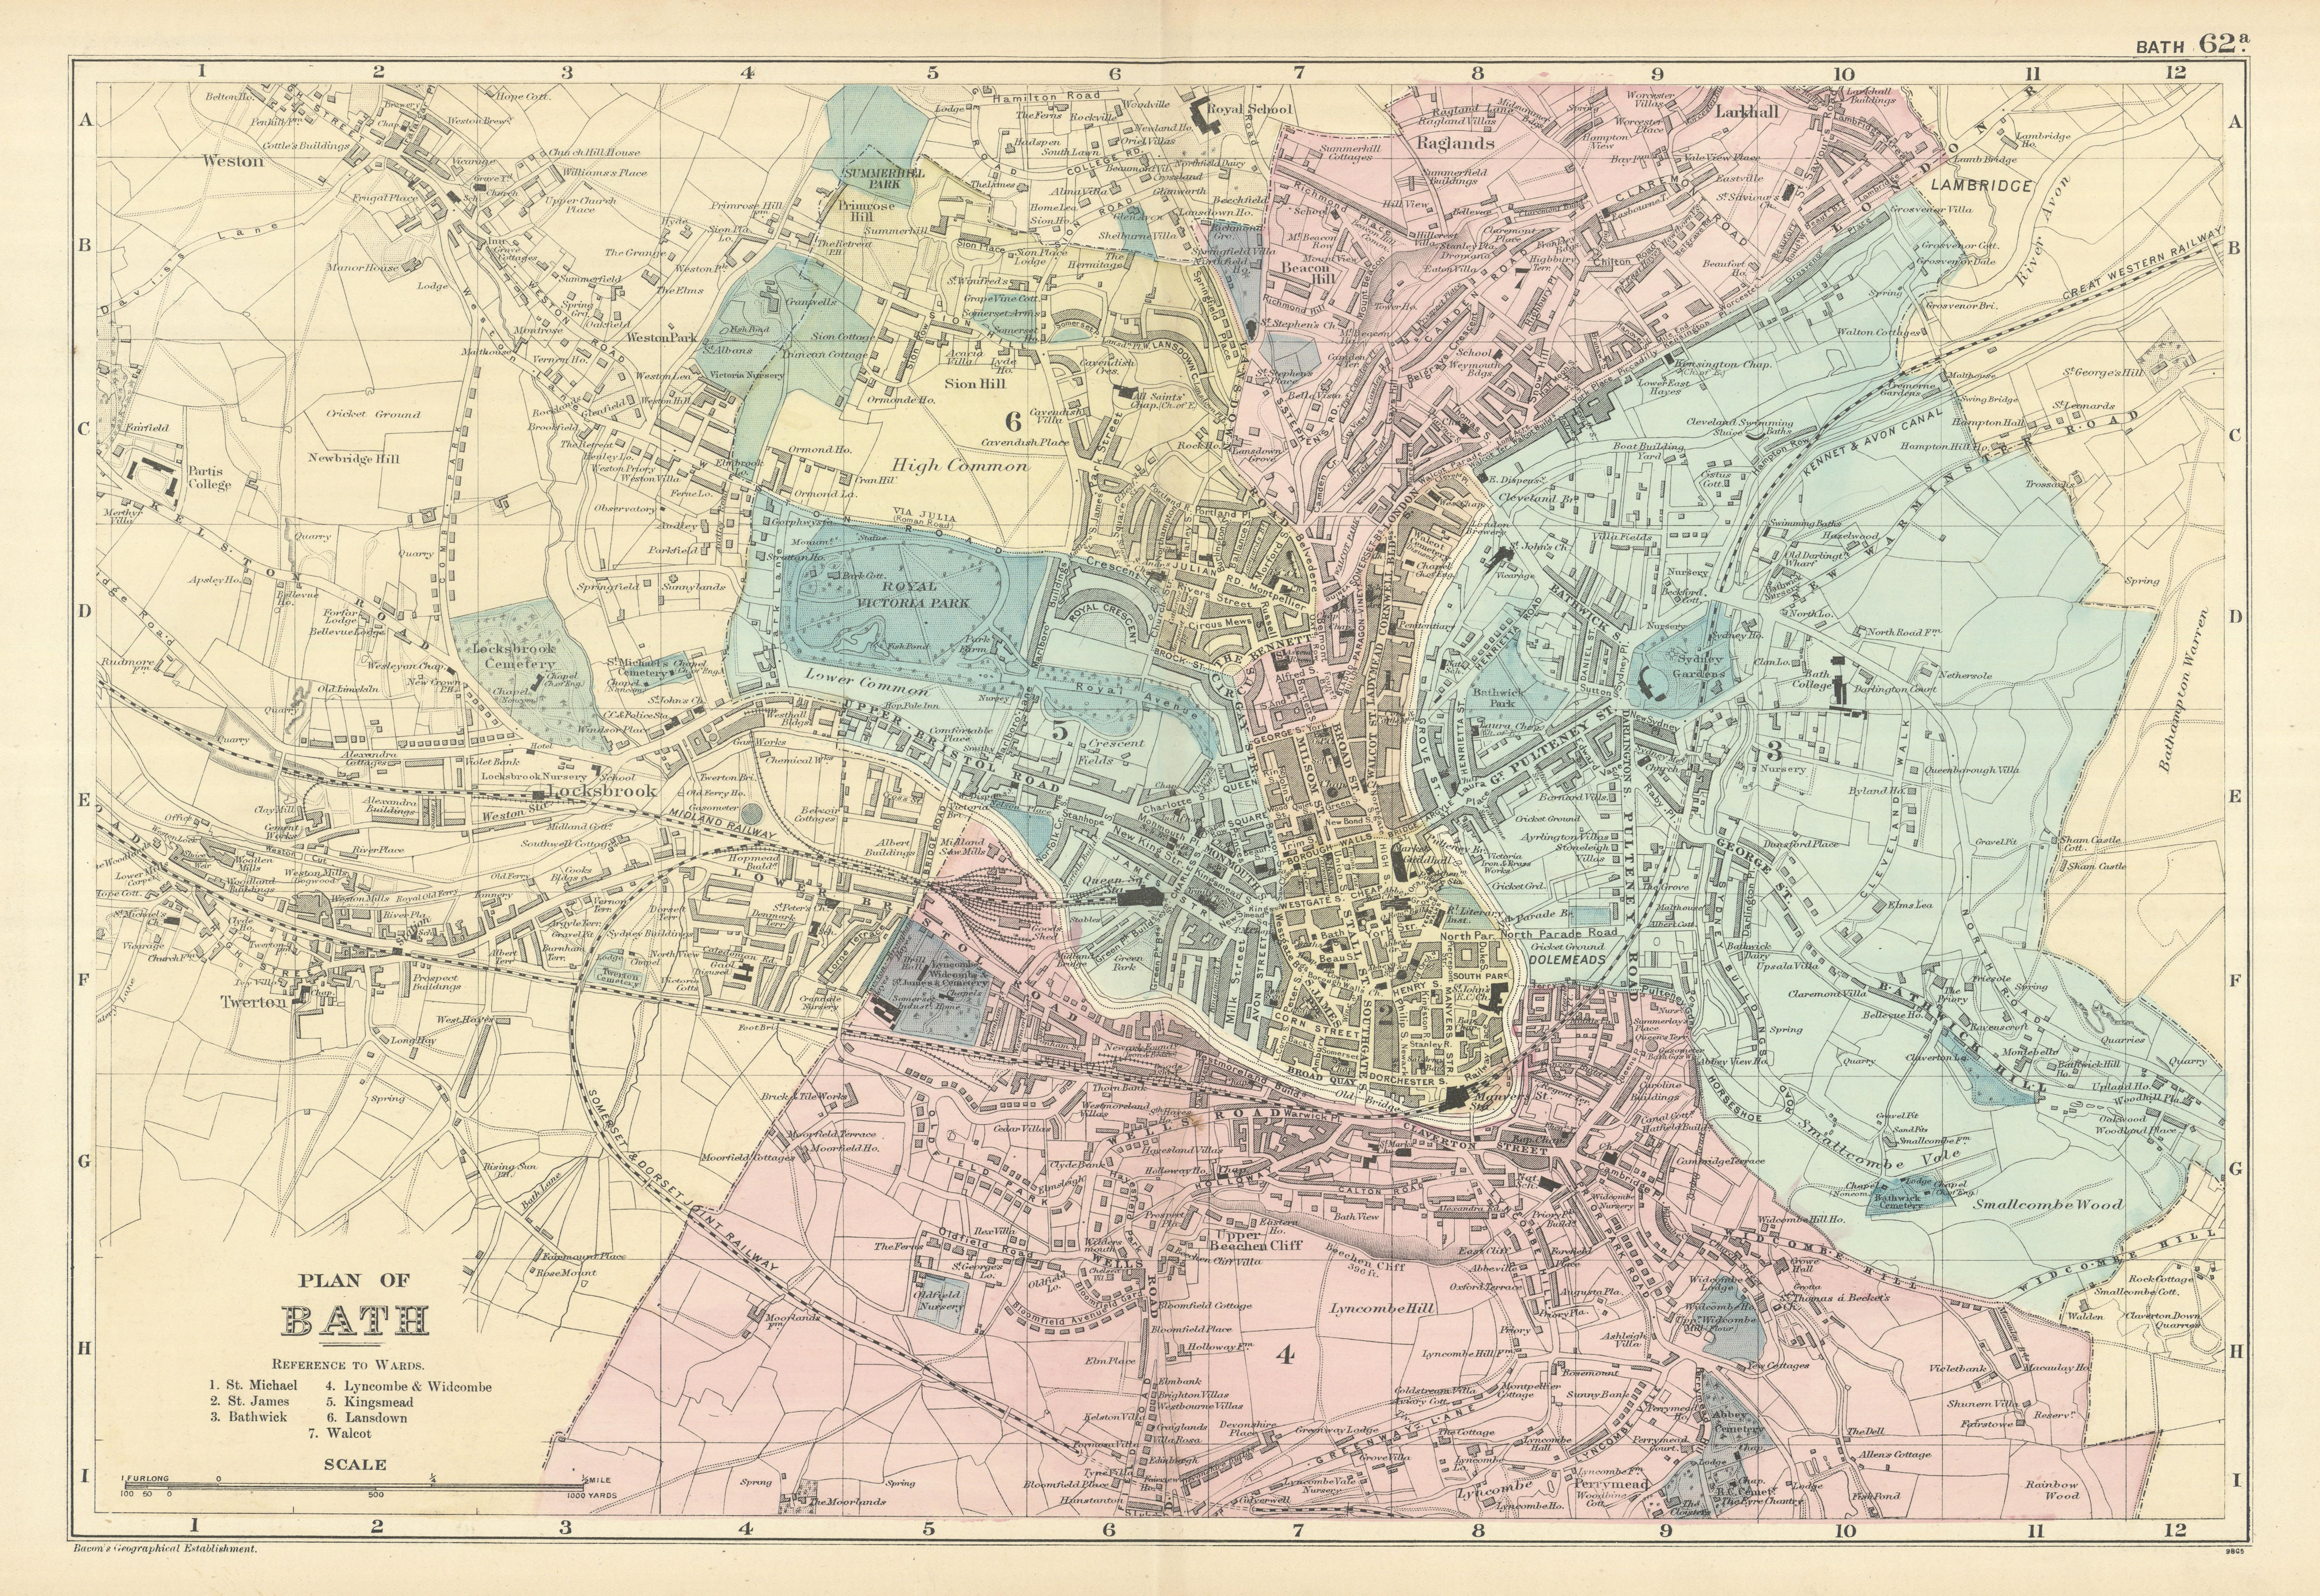 Associate Product BATH town city plan Bathwick Kingsmead Lansdown Lyncombe Widcombe BACON 1898 map